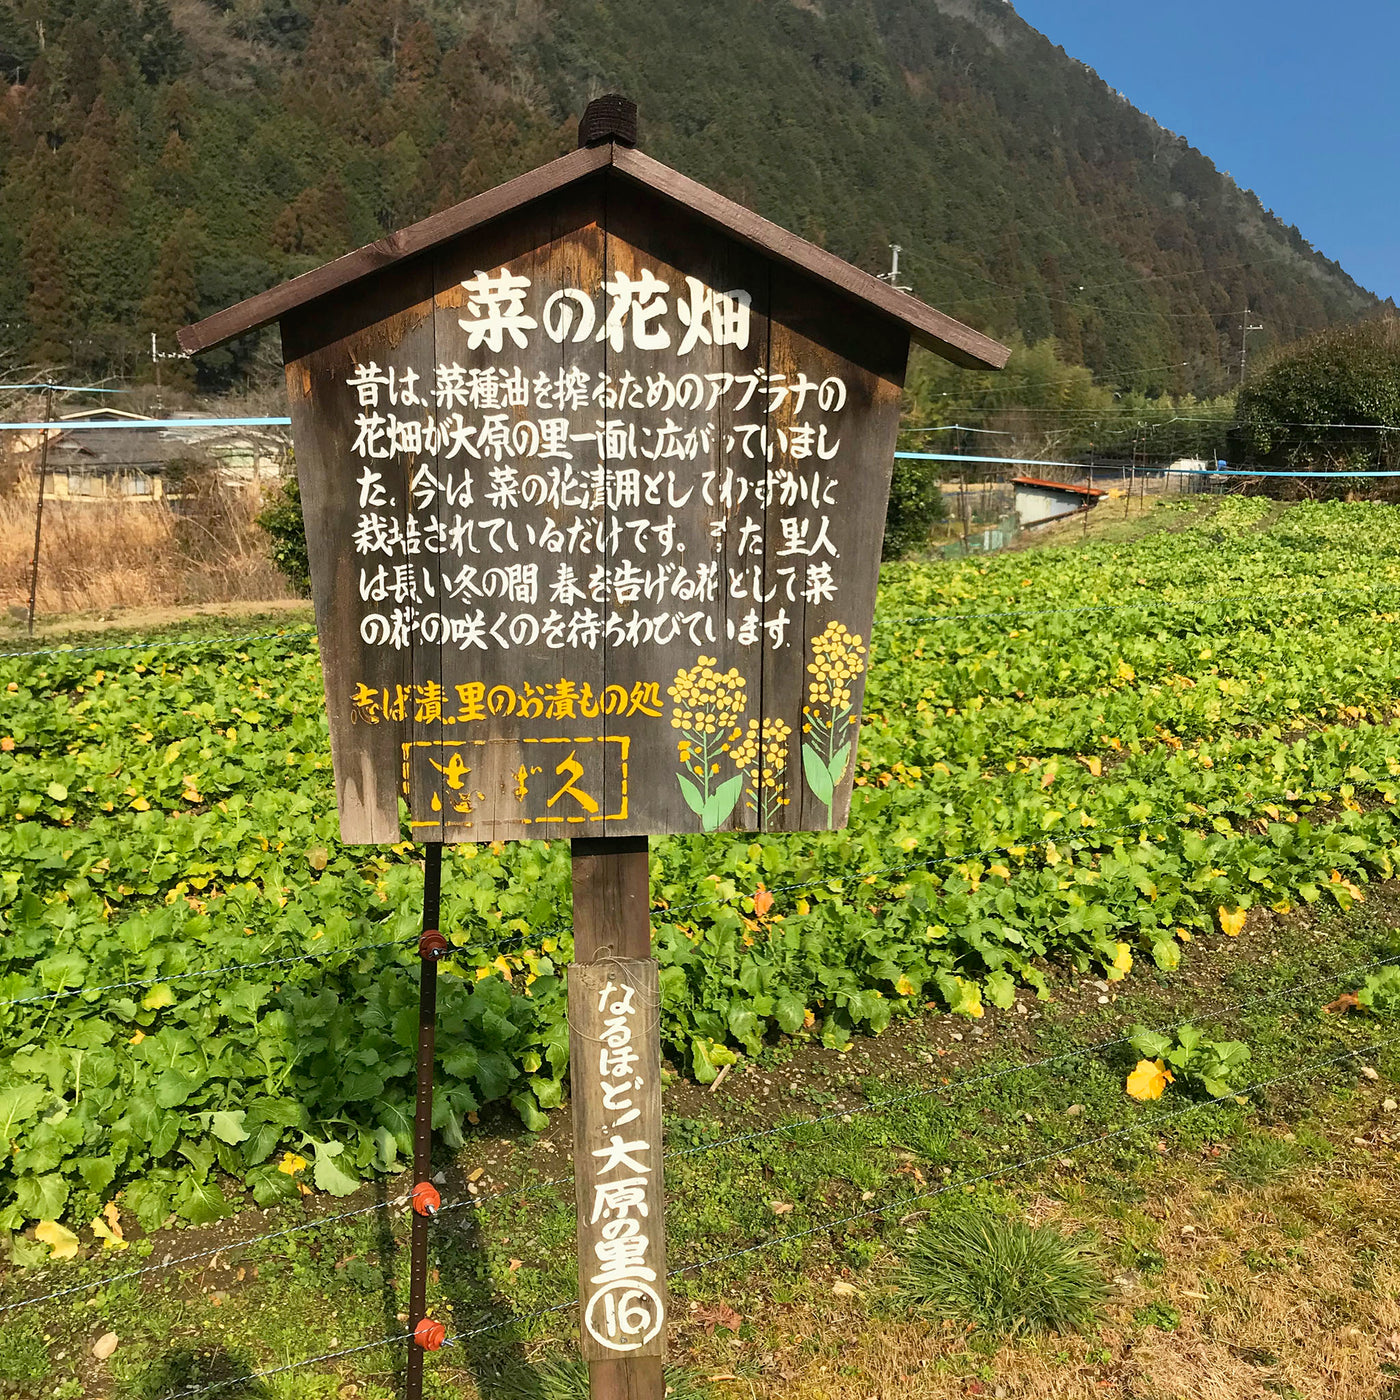 Botanical farm sign